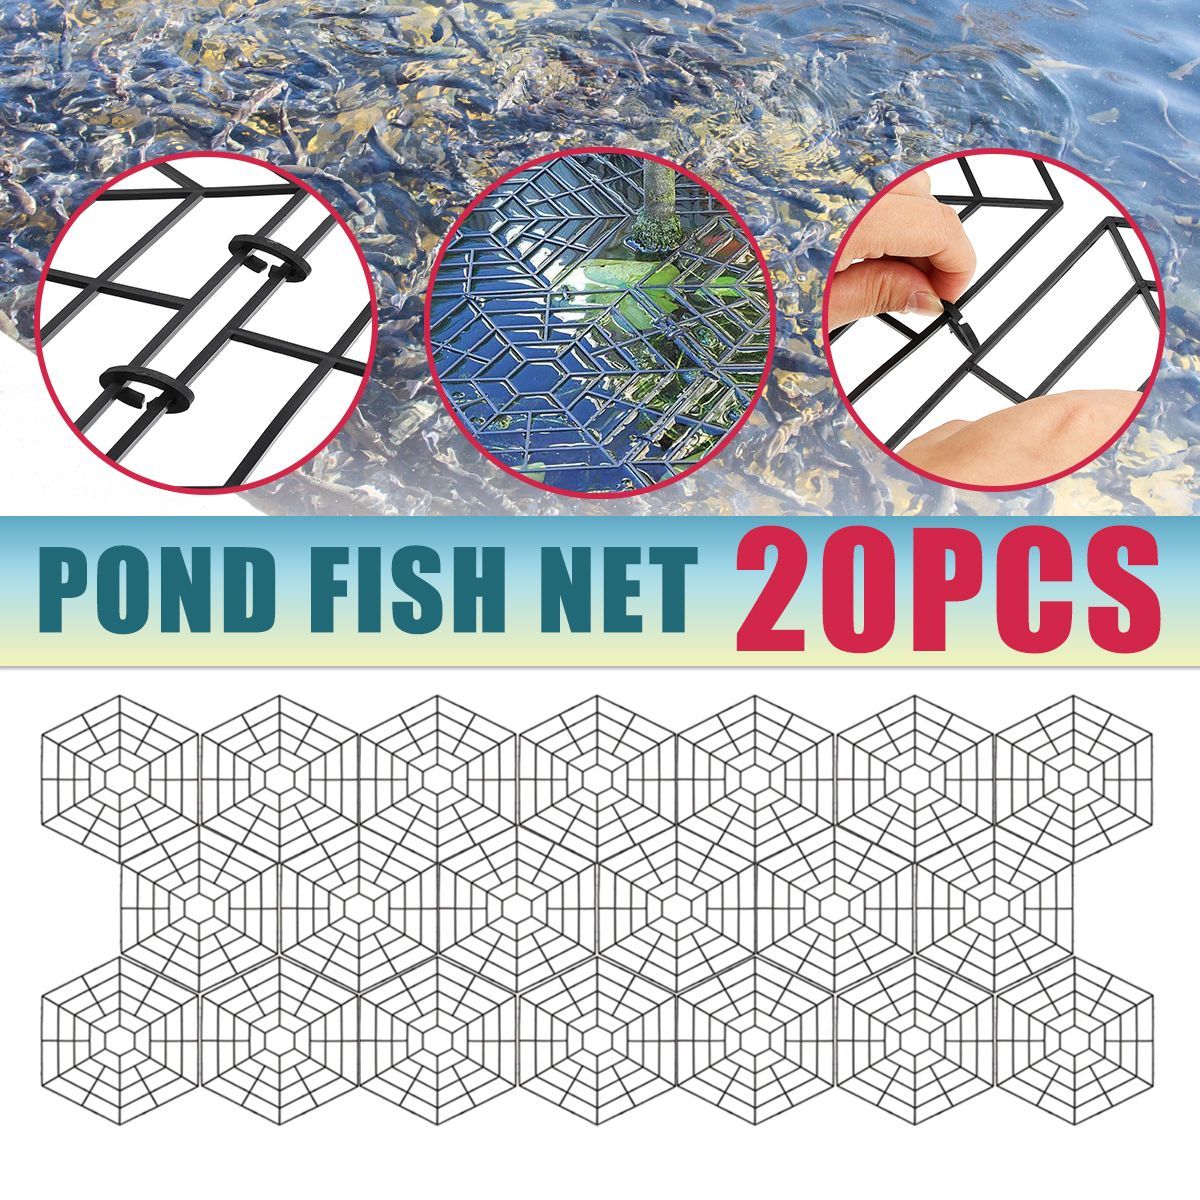 20PcsSet-Fish-Pond-Guard-Protector-Grids-Pond-Fish-Net-w-40PcsSet-Buckles-for-Fishing-1614810